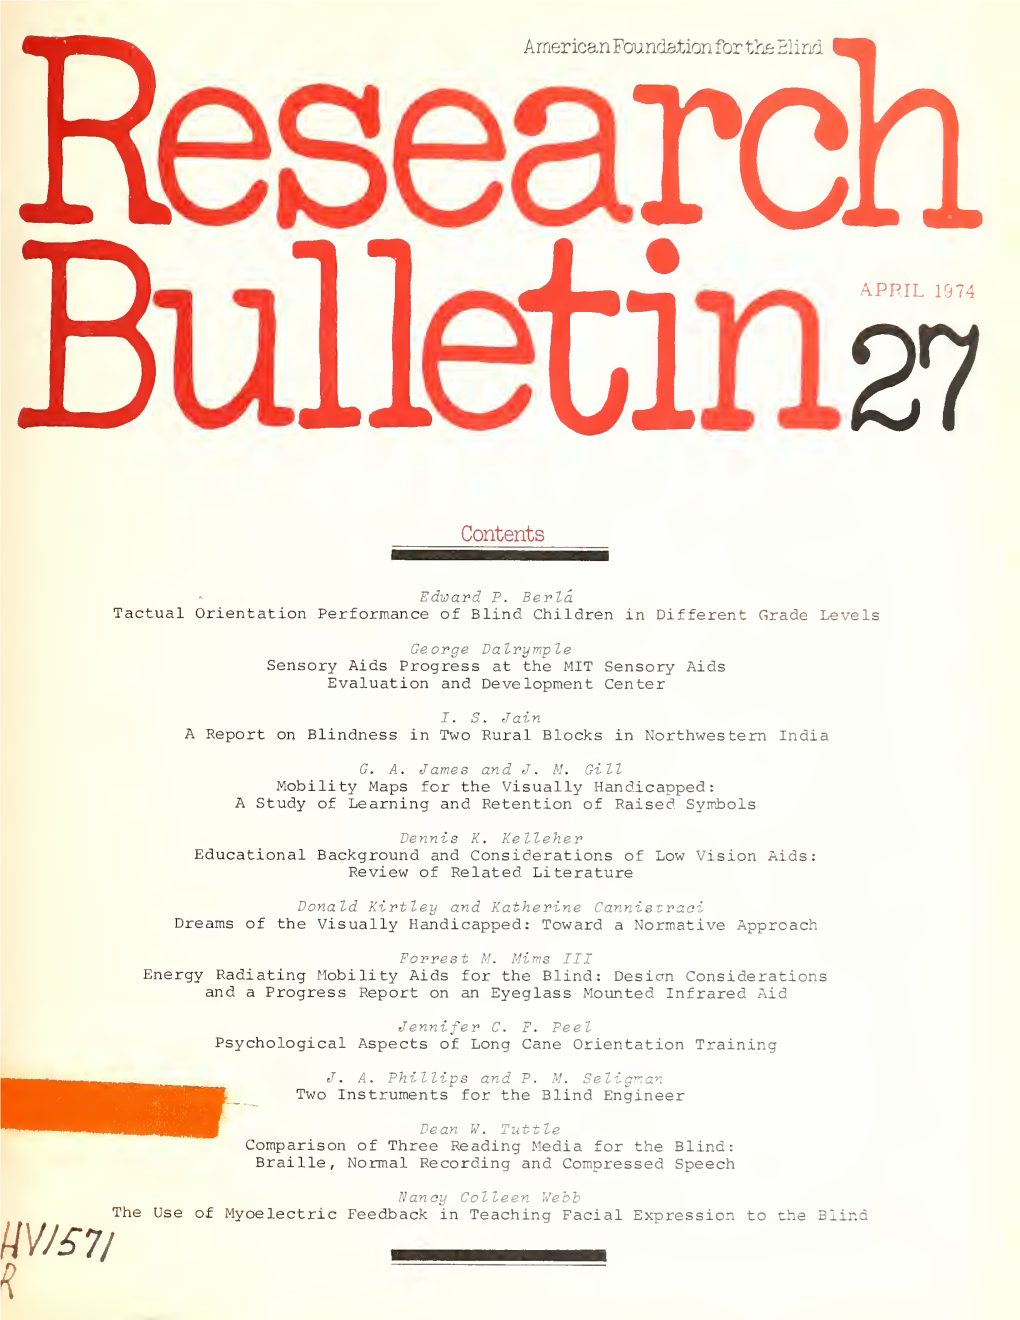 AFB Research Bulletin 27 Apr., 1974